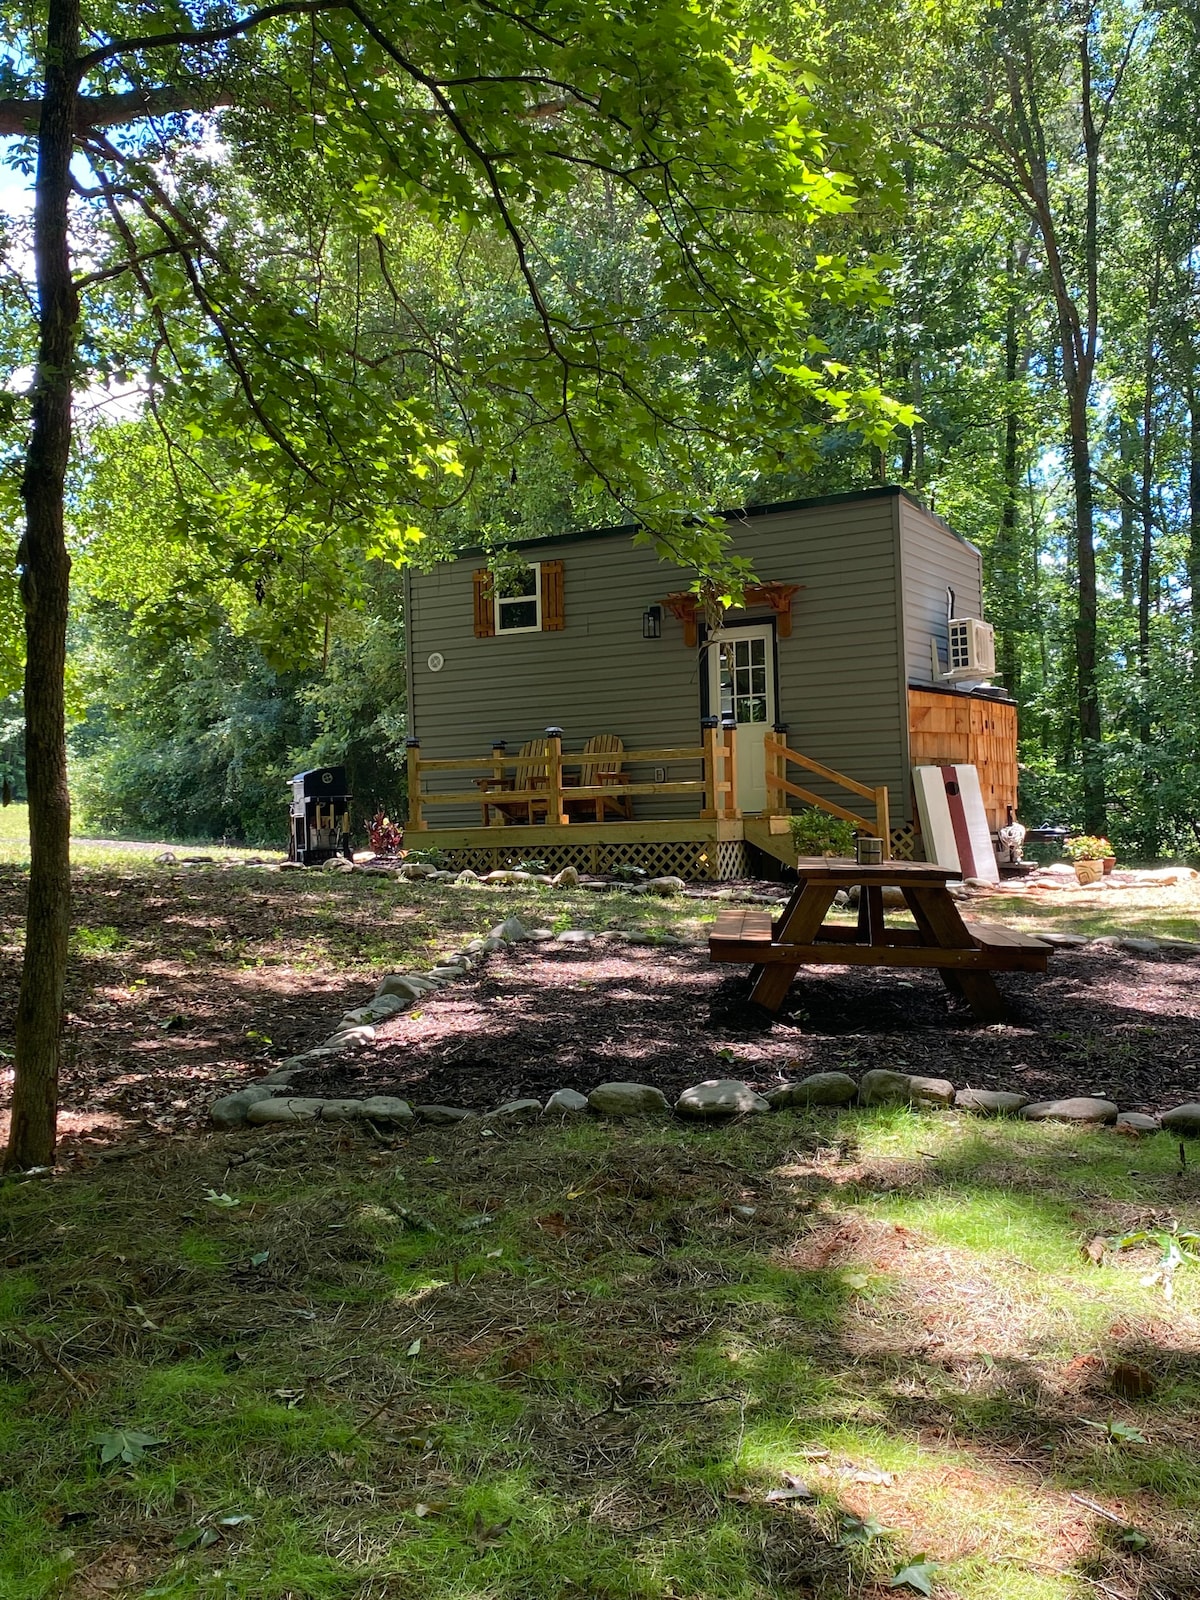 Faith & Farm Tiny House - Private Setting w/ Creek